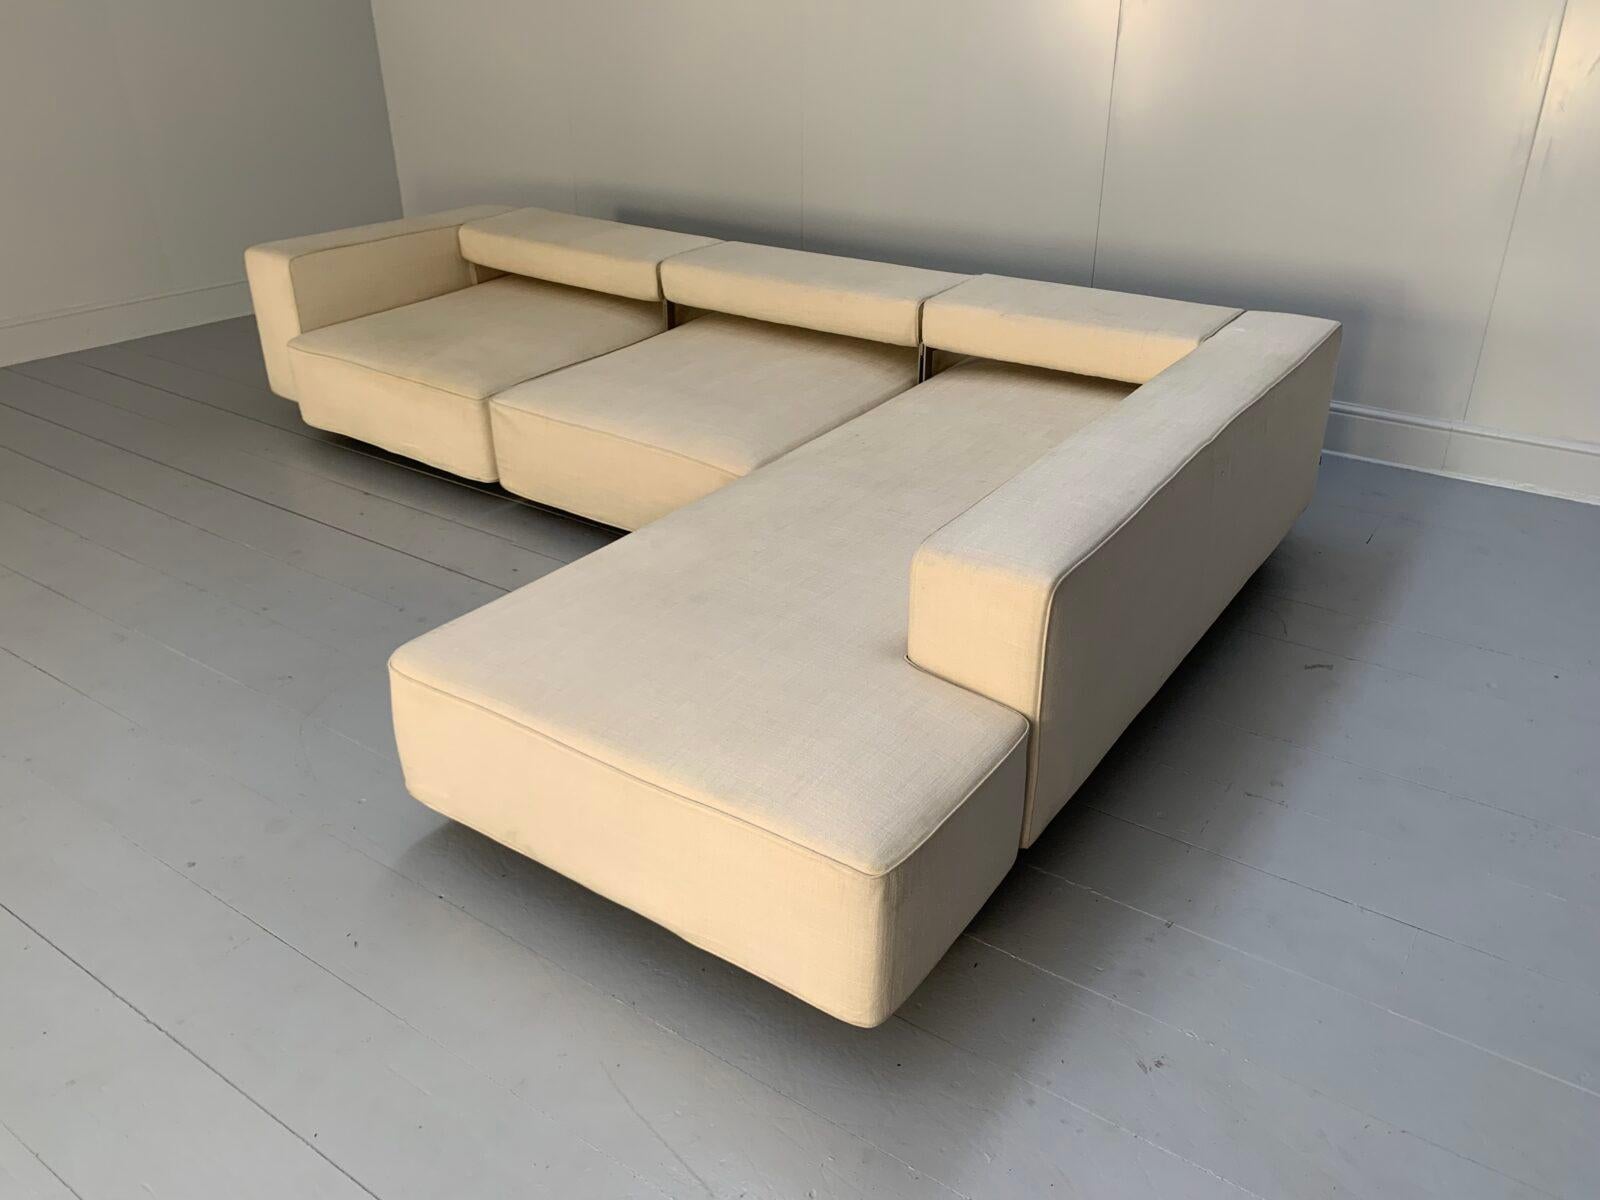 B&B Italia “Andy '13” L-Shape Sofa - In Neutral Fabric In Good Condition For Sale In Barrowford, GB